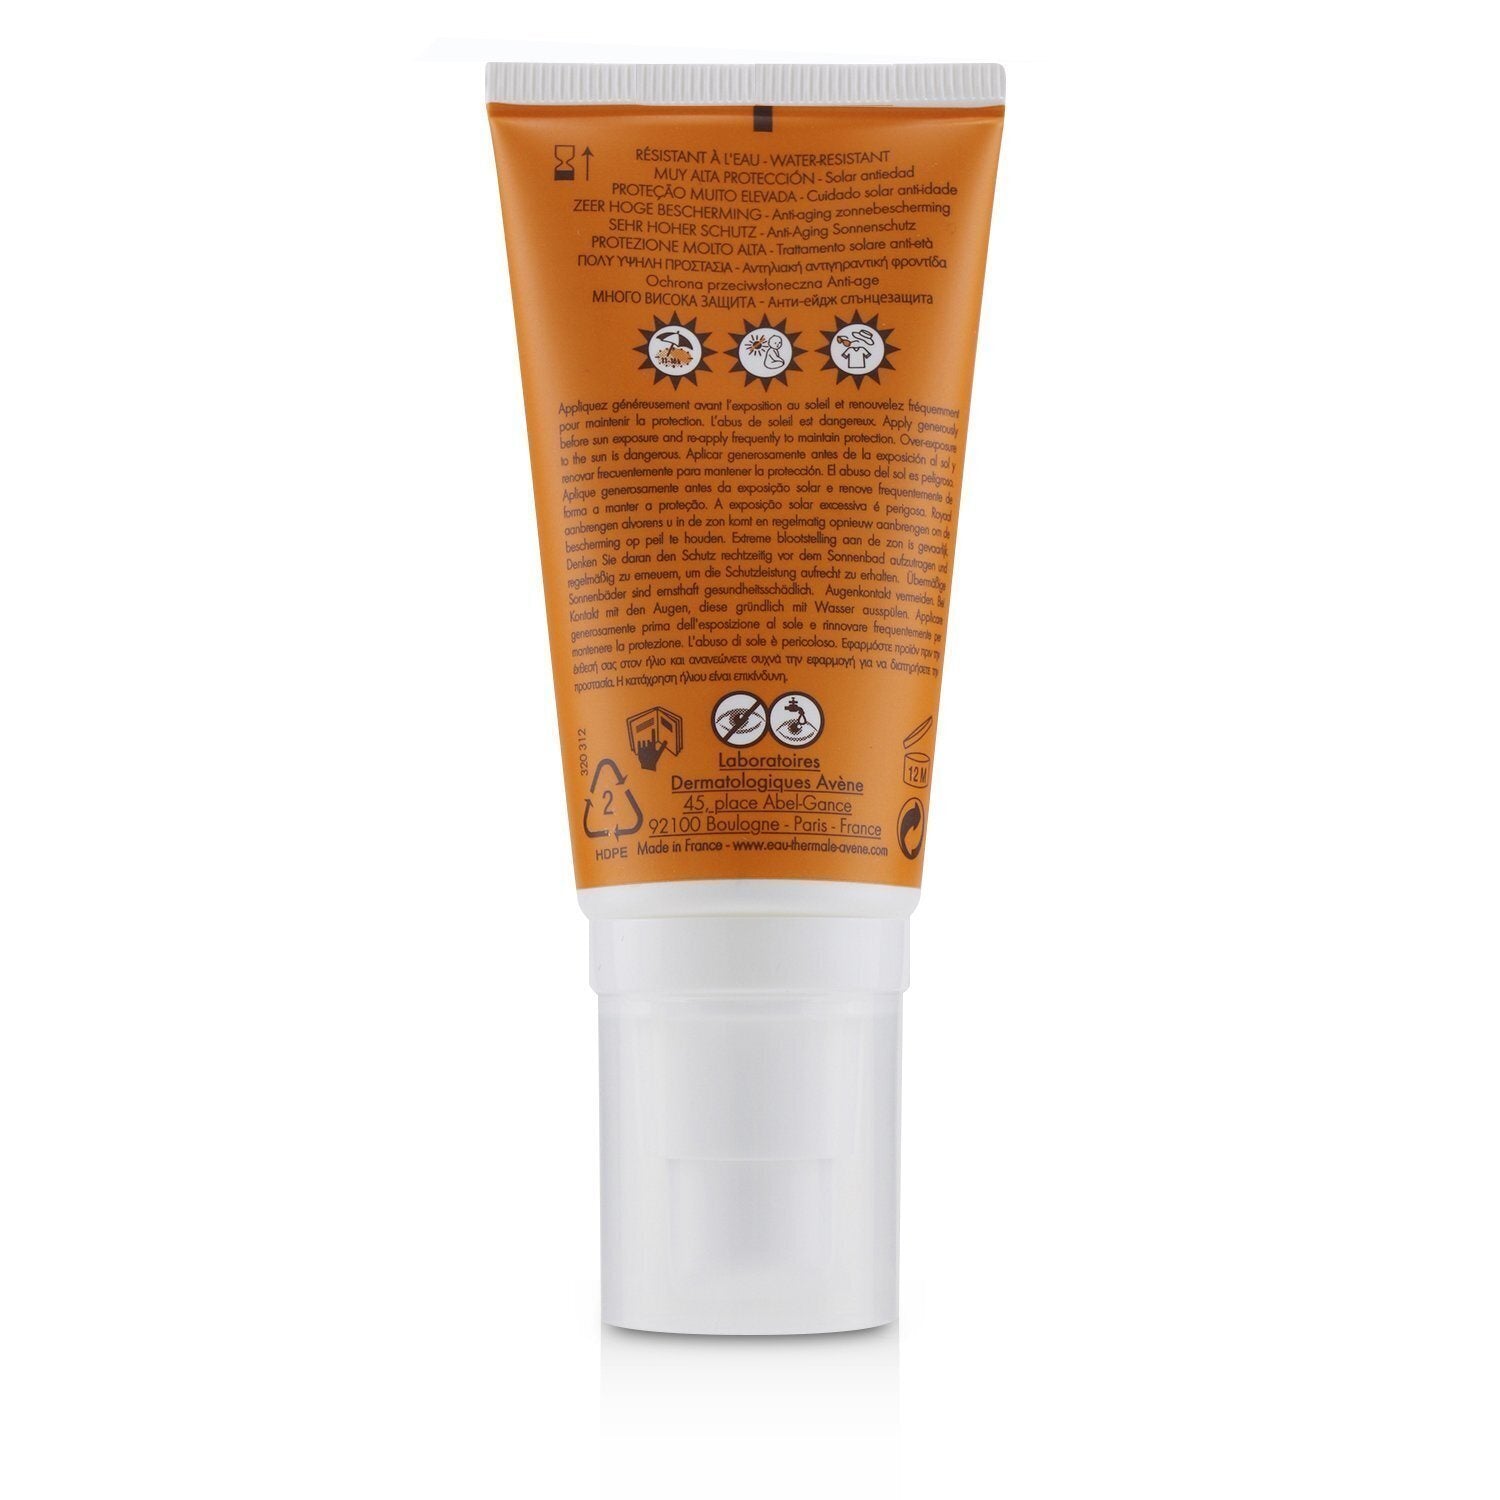 AVENE - Anti-Aging Suncare SPF 50+ - For Sensitive Skin 07265 50ml/1.7oz with important anti-aging sunscreen.